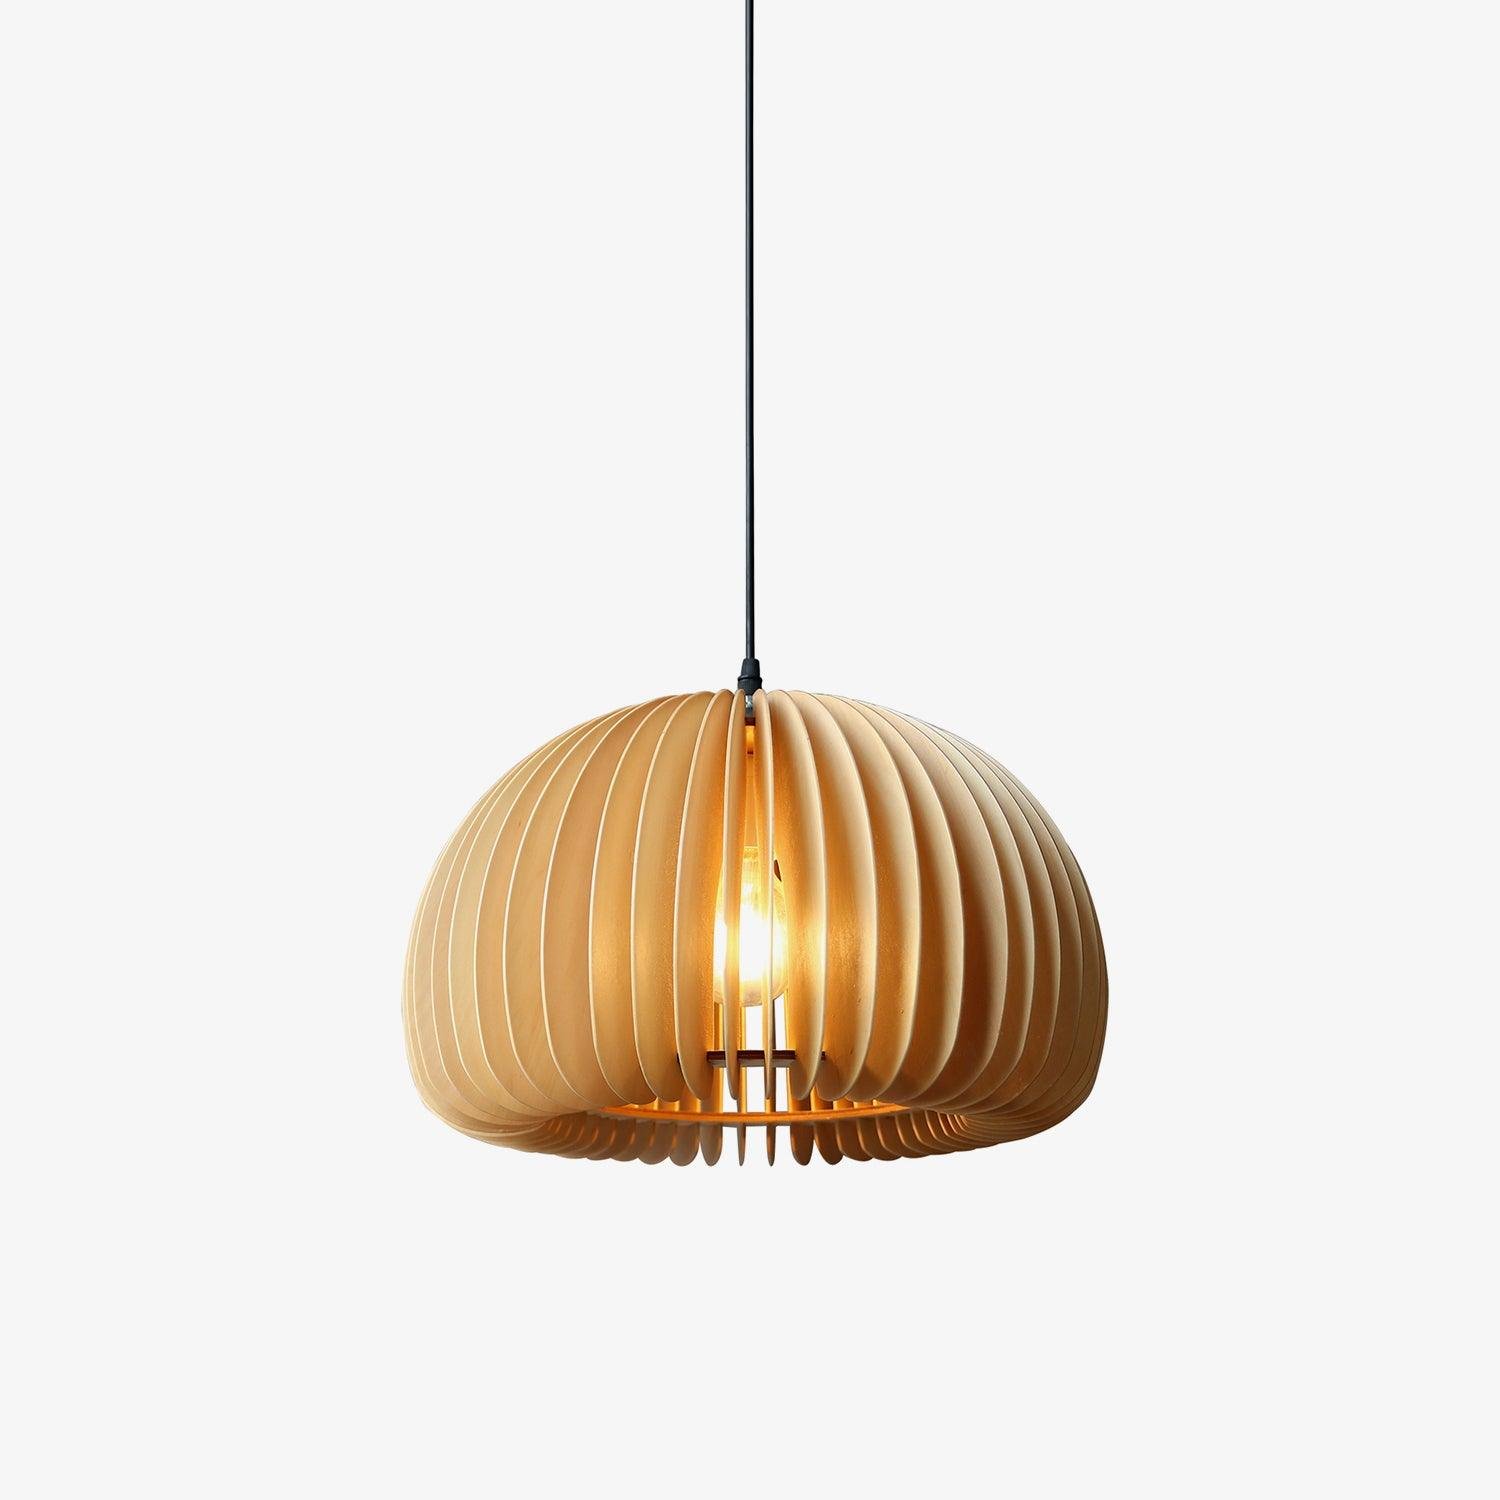 Wooden Pendant Lamp in Light Brown - Diameter 16.5" x Height 10" (42cm x 25cm)